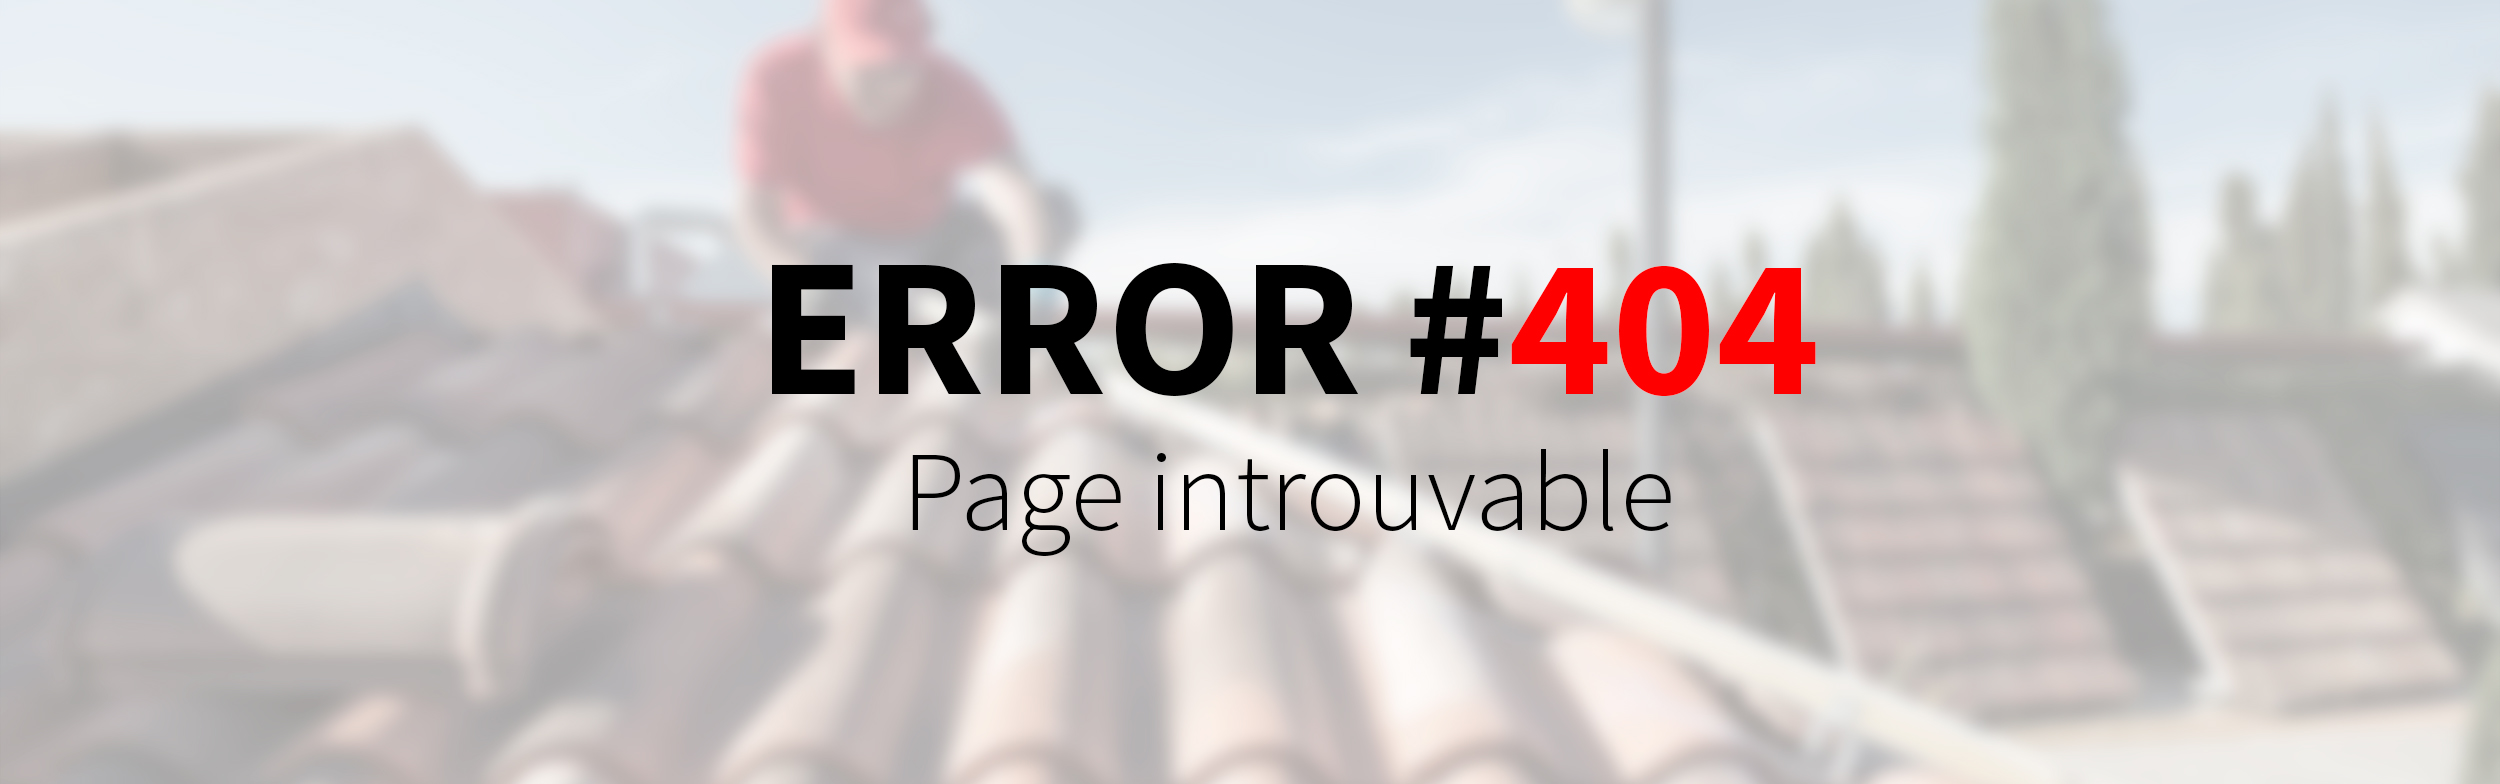 404 Page Introuvable